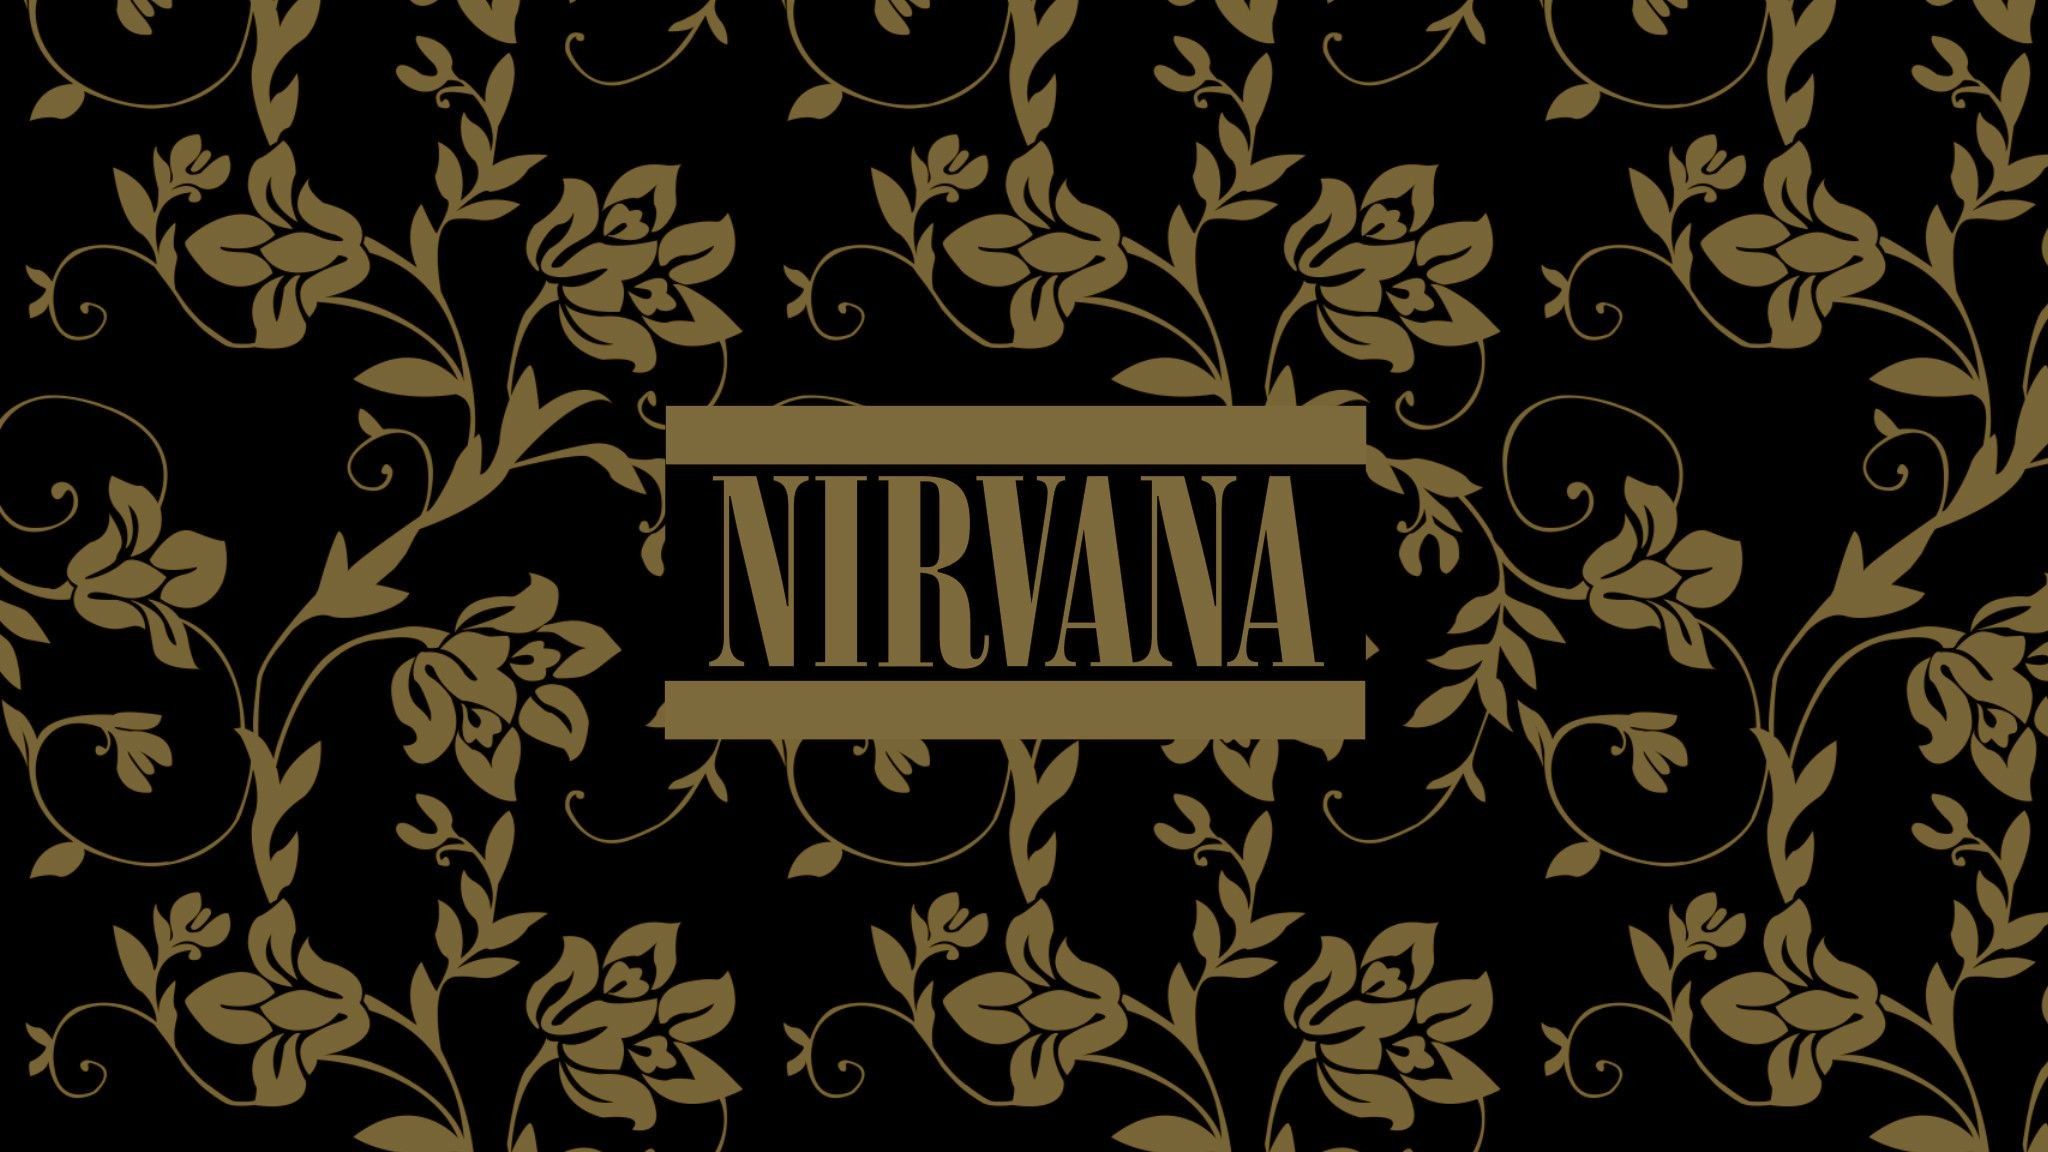 61 Nirvana Wallpapers On Wallpaperplay 
 Data-src /img/1077368 - Nirvana Wallpaper 4k - HD Wallpaper 